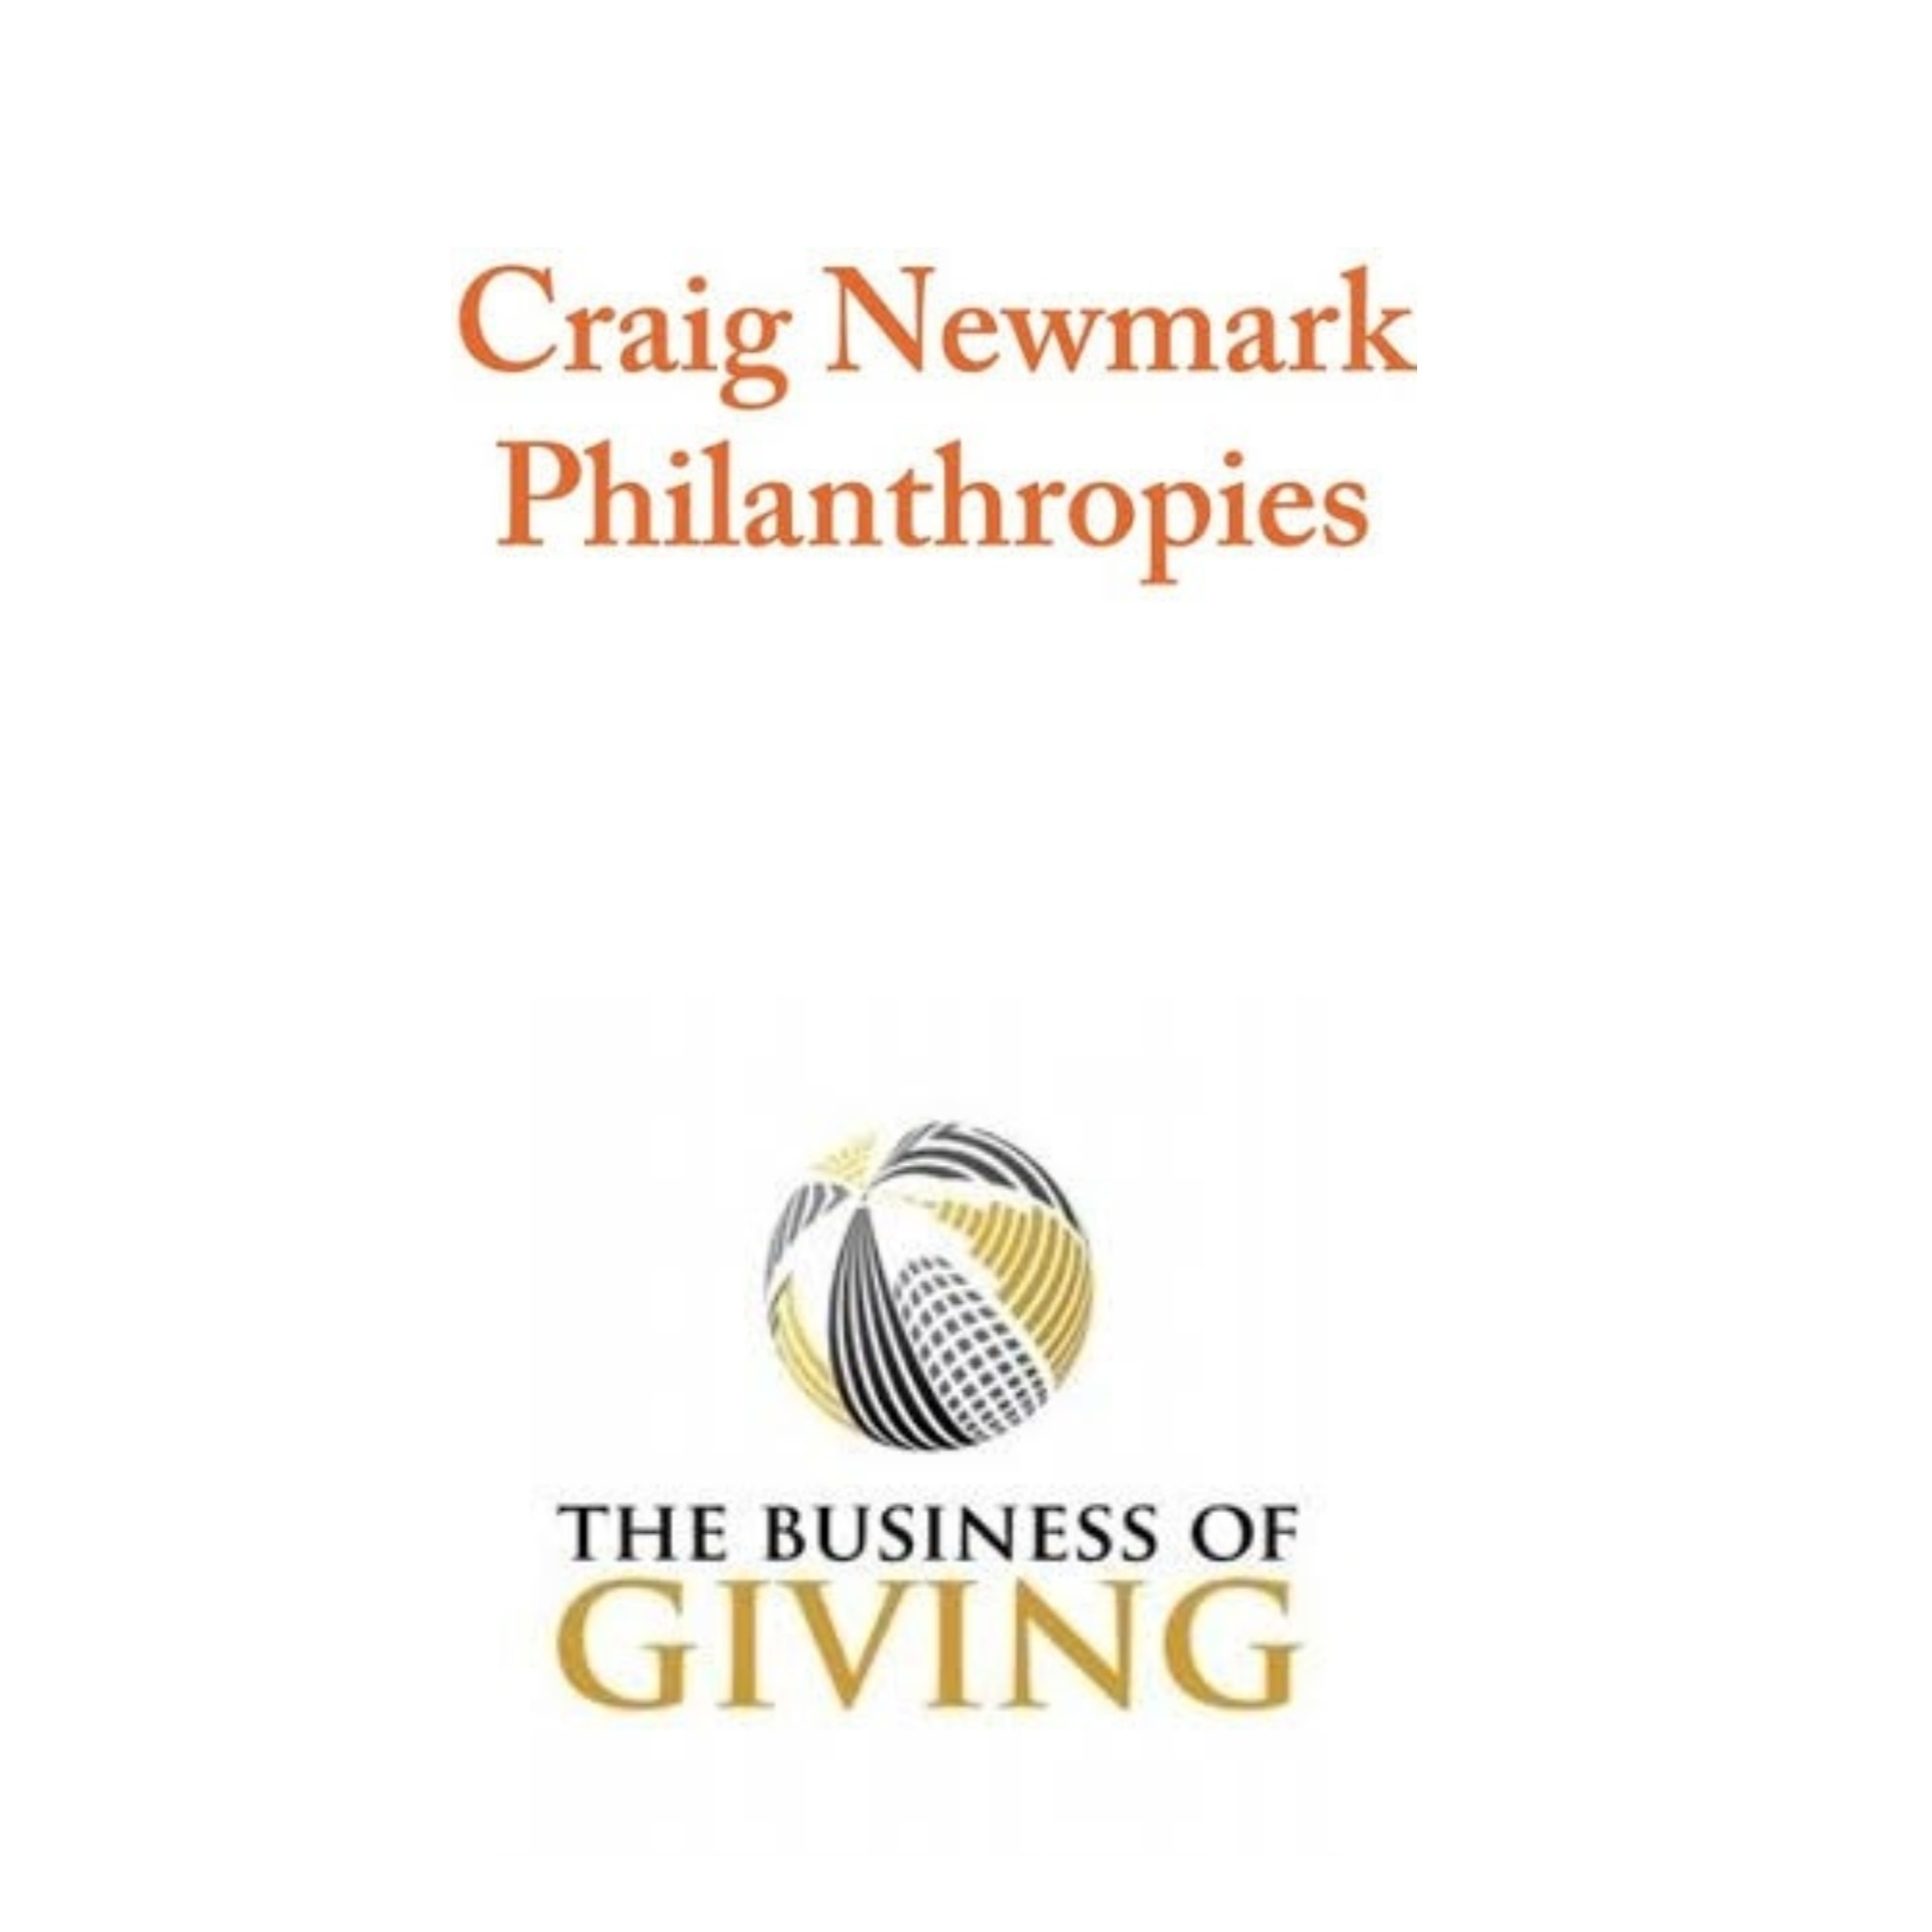 Craig Newmark, founder of Craig’s List and Craig Newmark